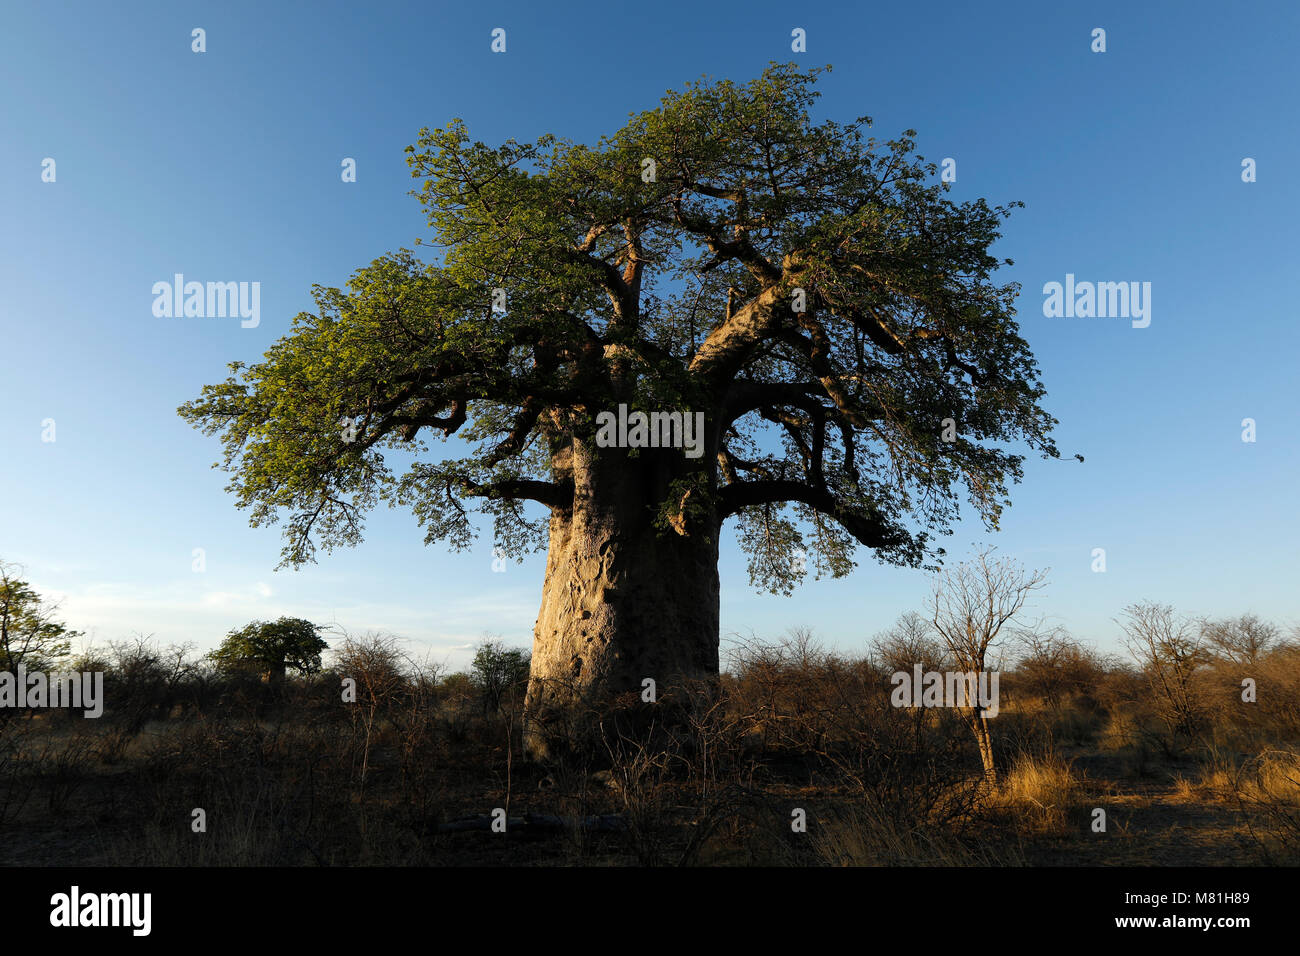 A baobab tree at dusk Stock Photo